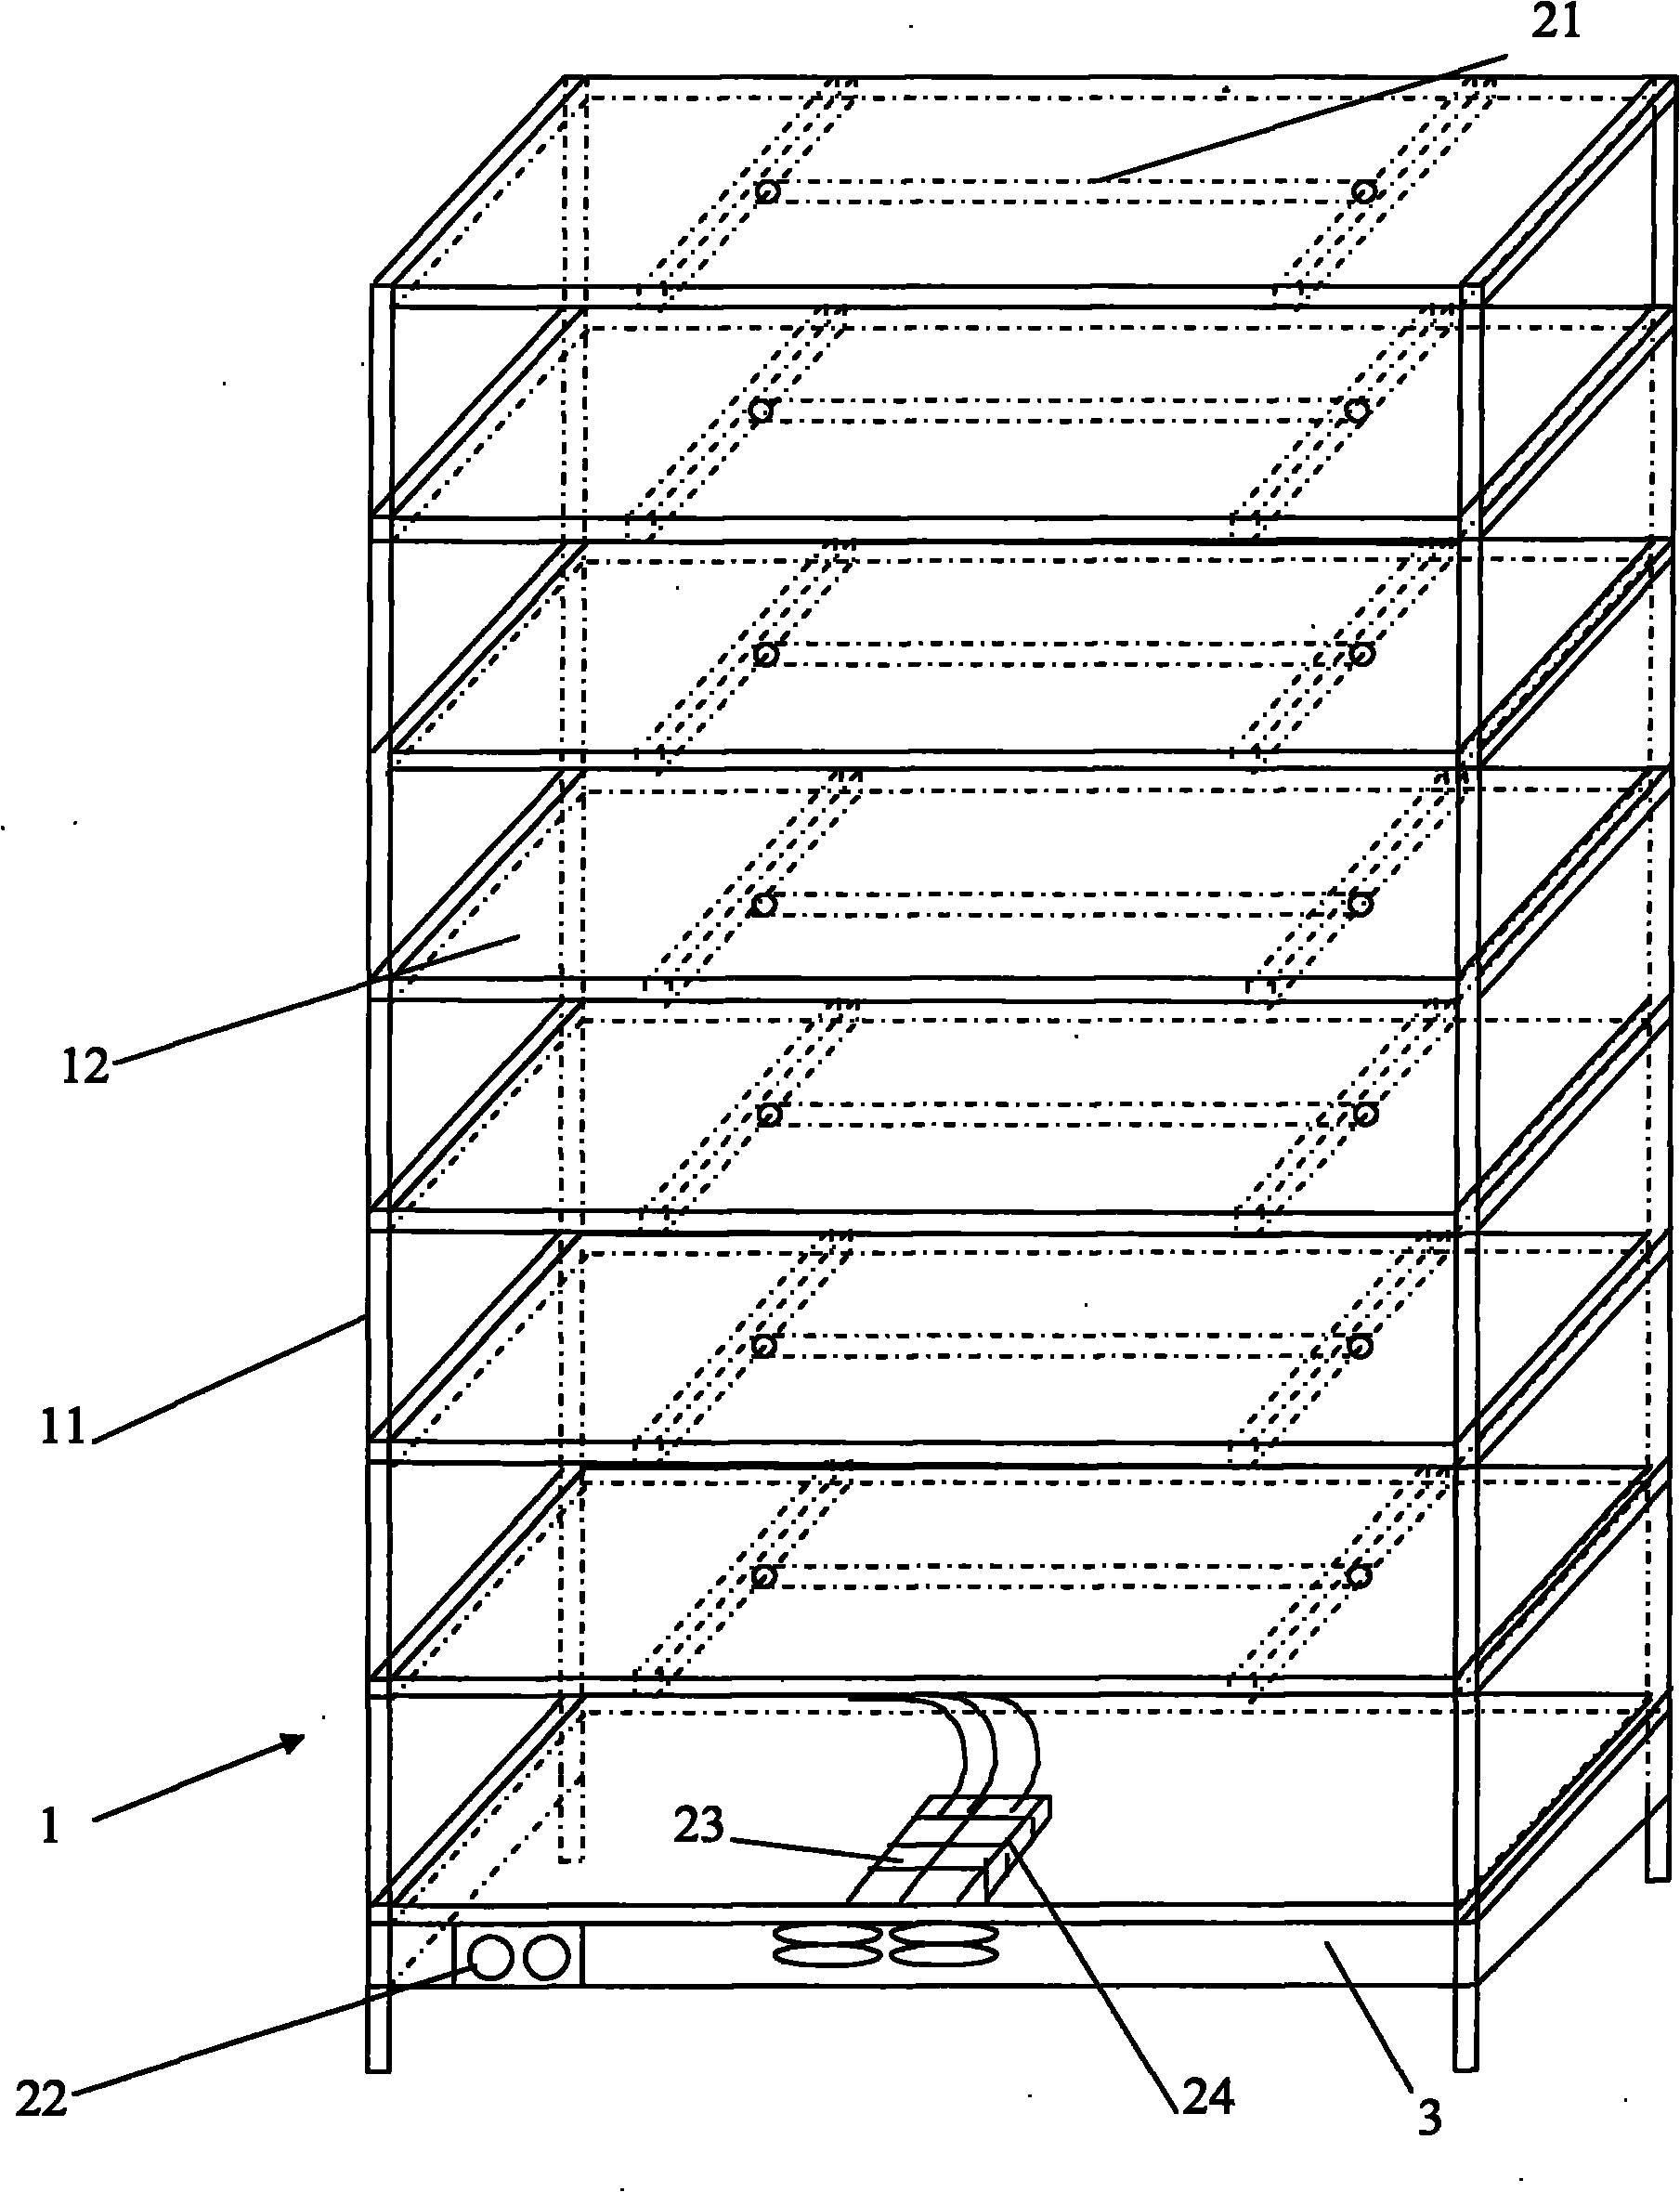 Large-scale culture method of cordyceps sinensis